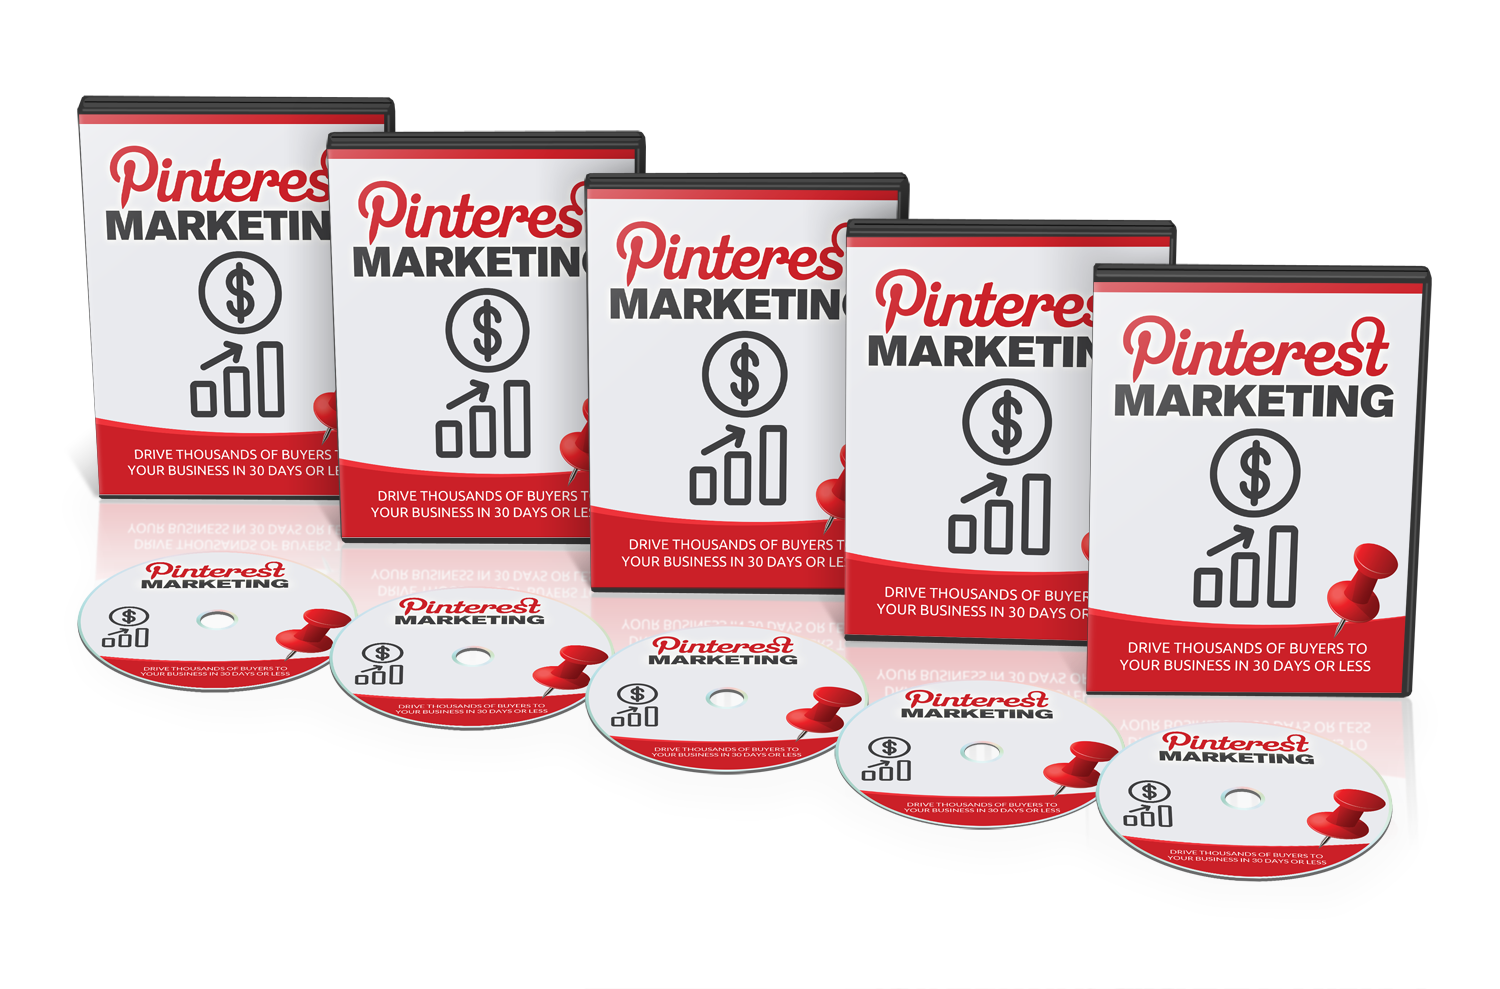 Pinterest Marketing Training Course - Marketing Solved